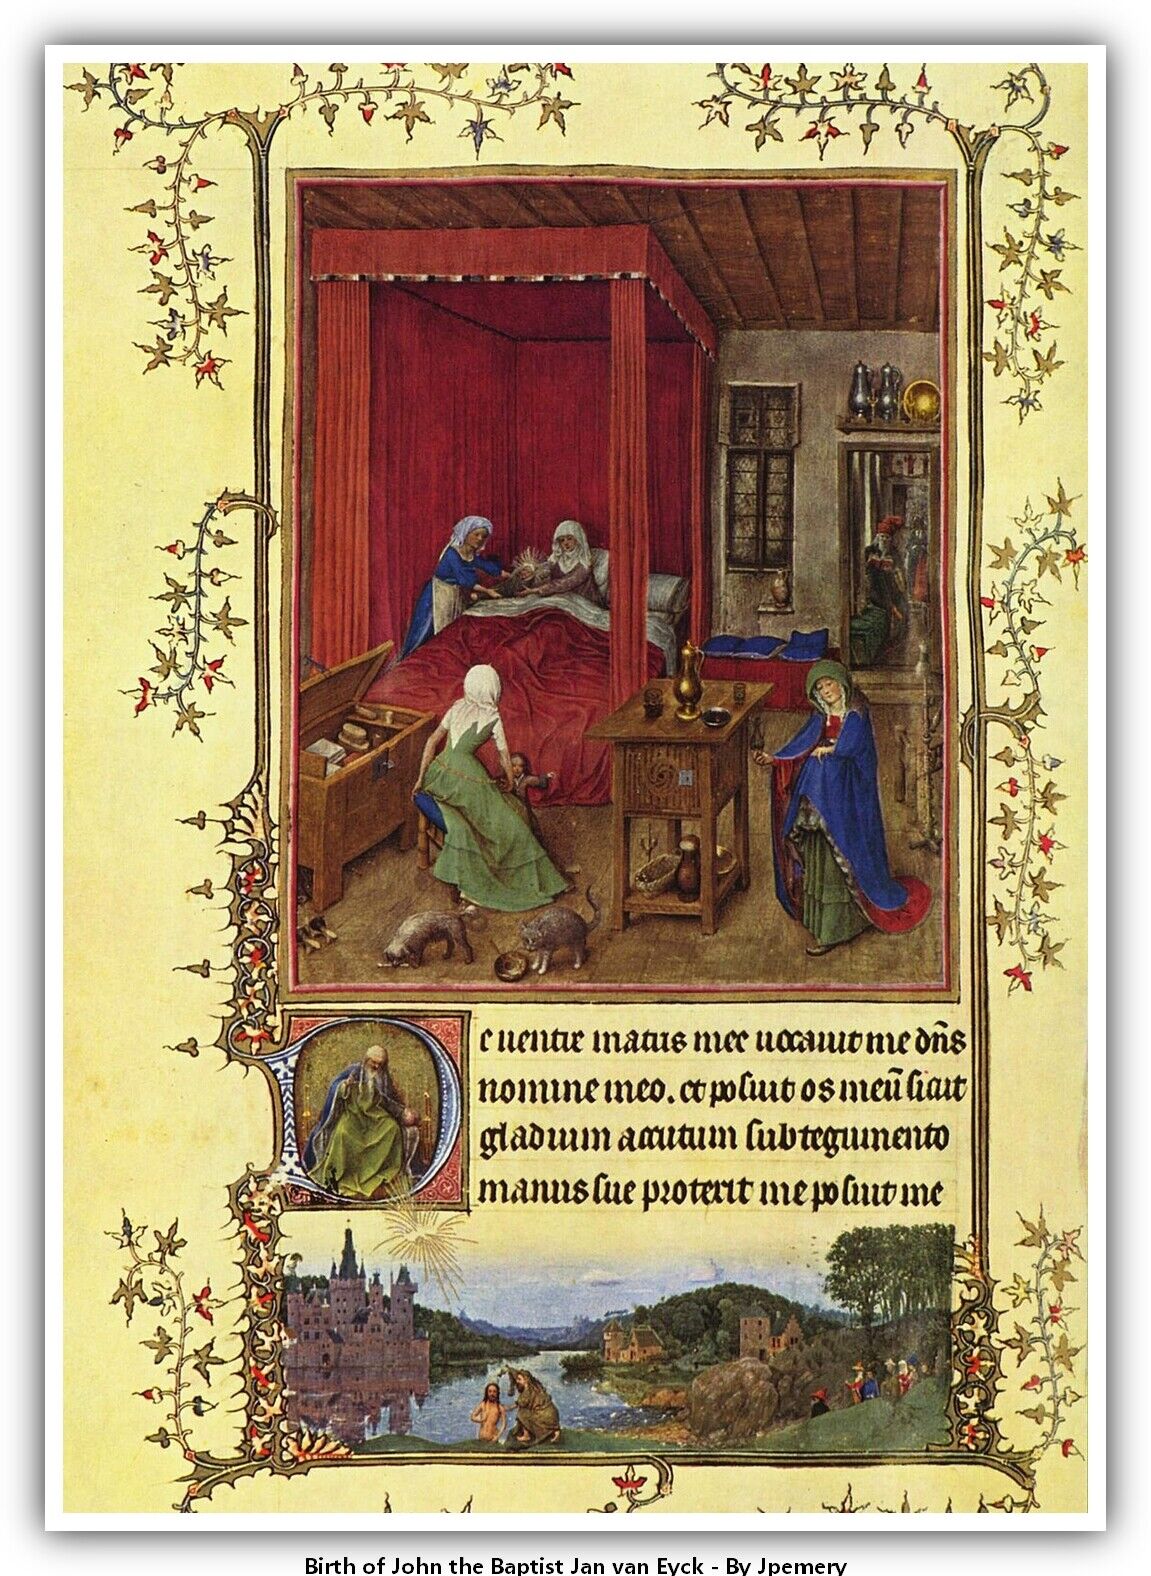 Birth of John the Baptist Jan van Eyck